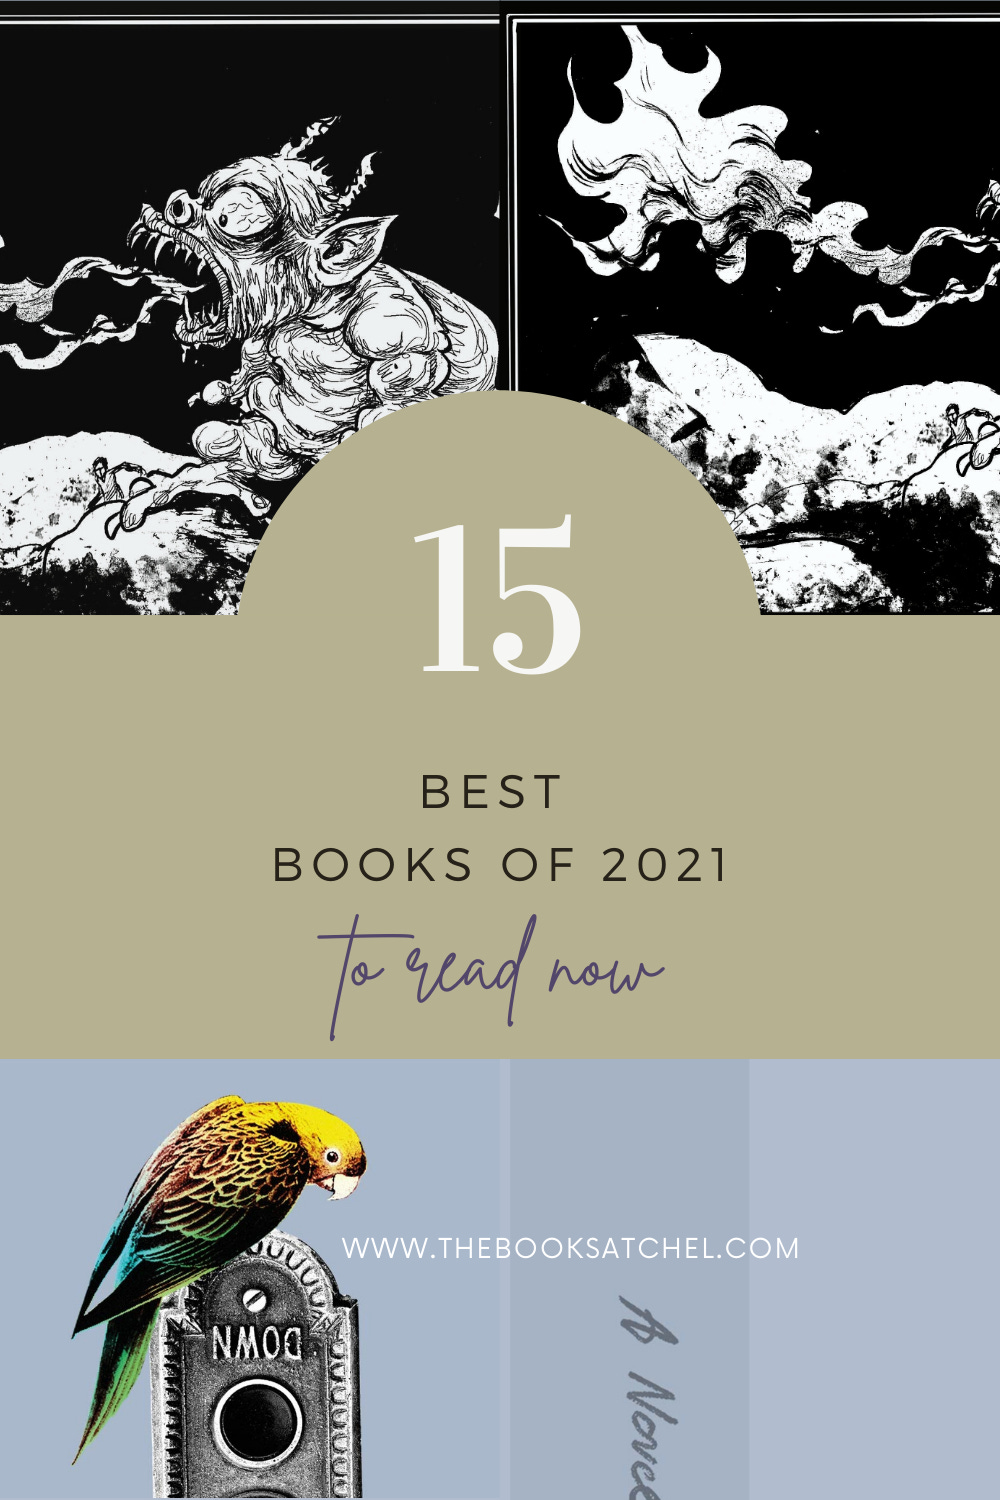 Best books of 2021